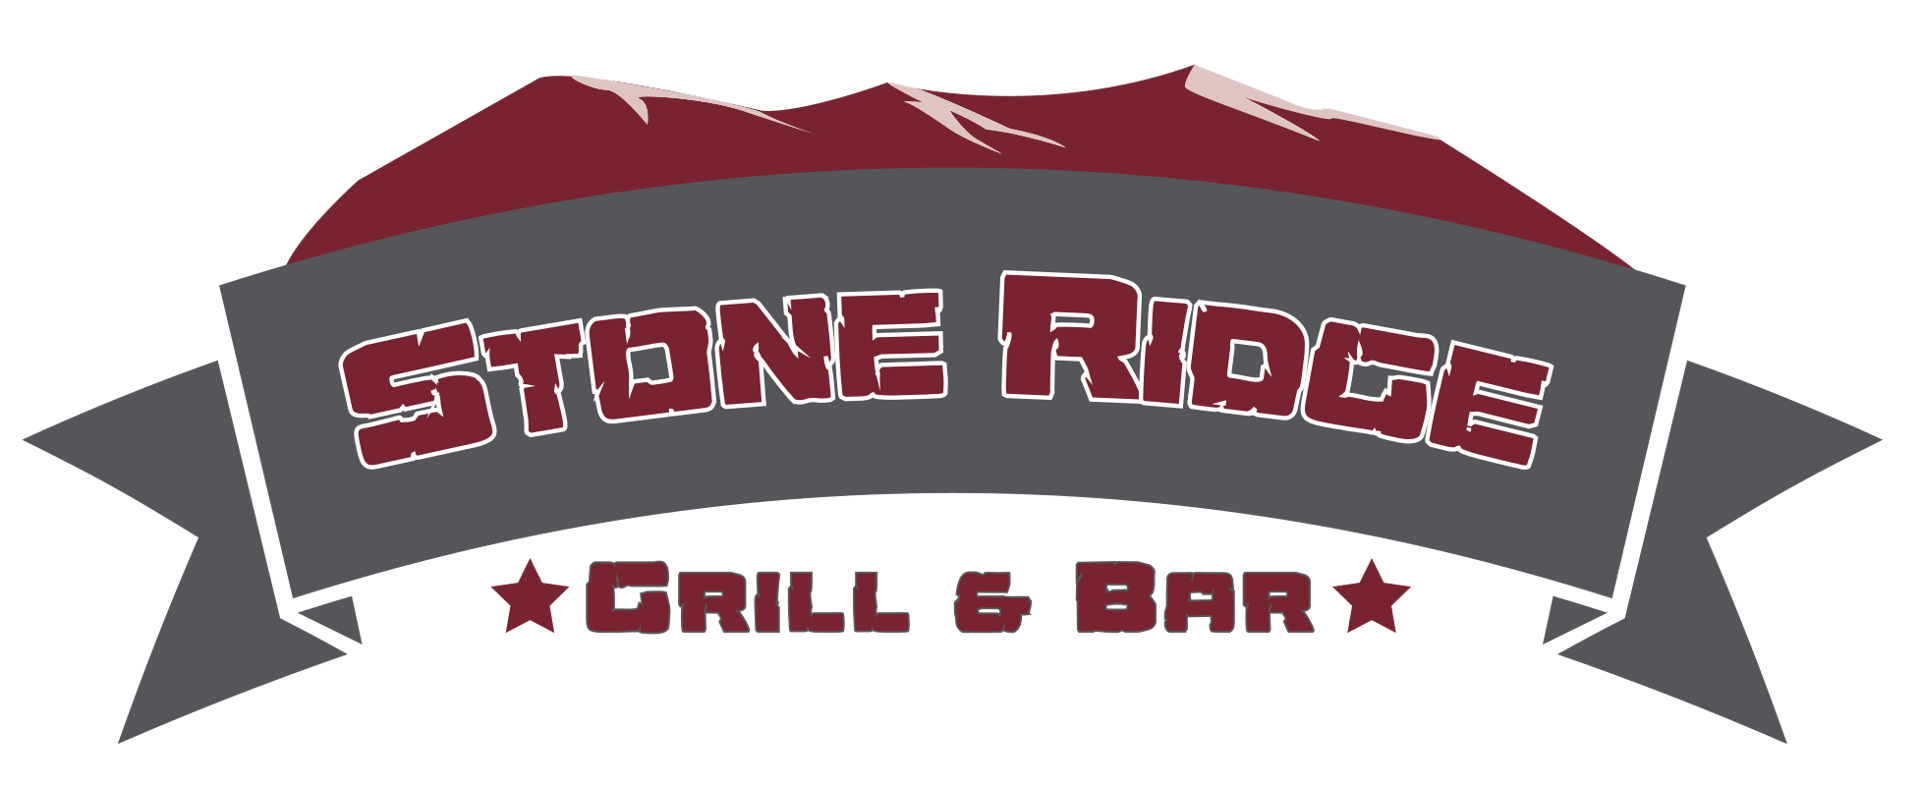 stone ridge logo